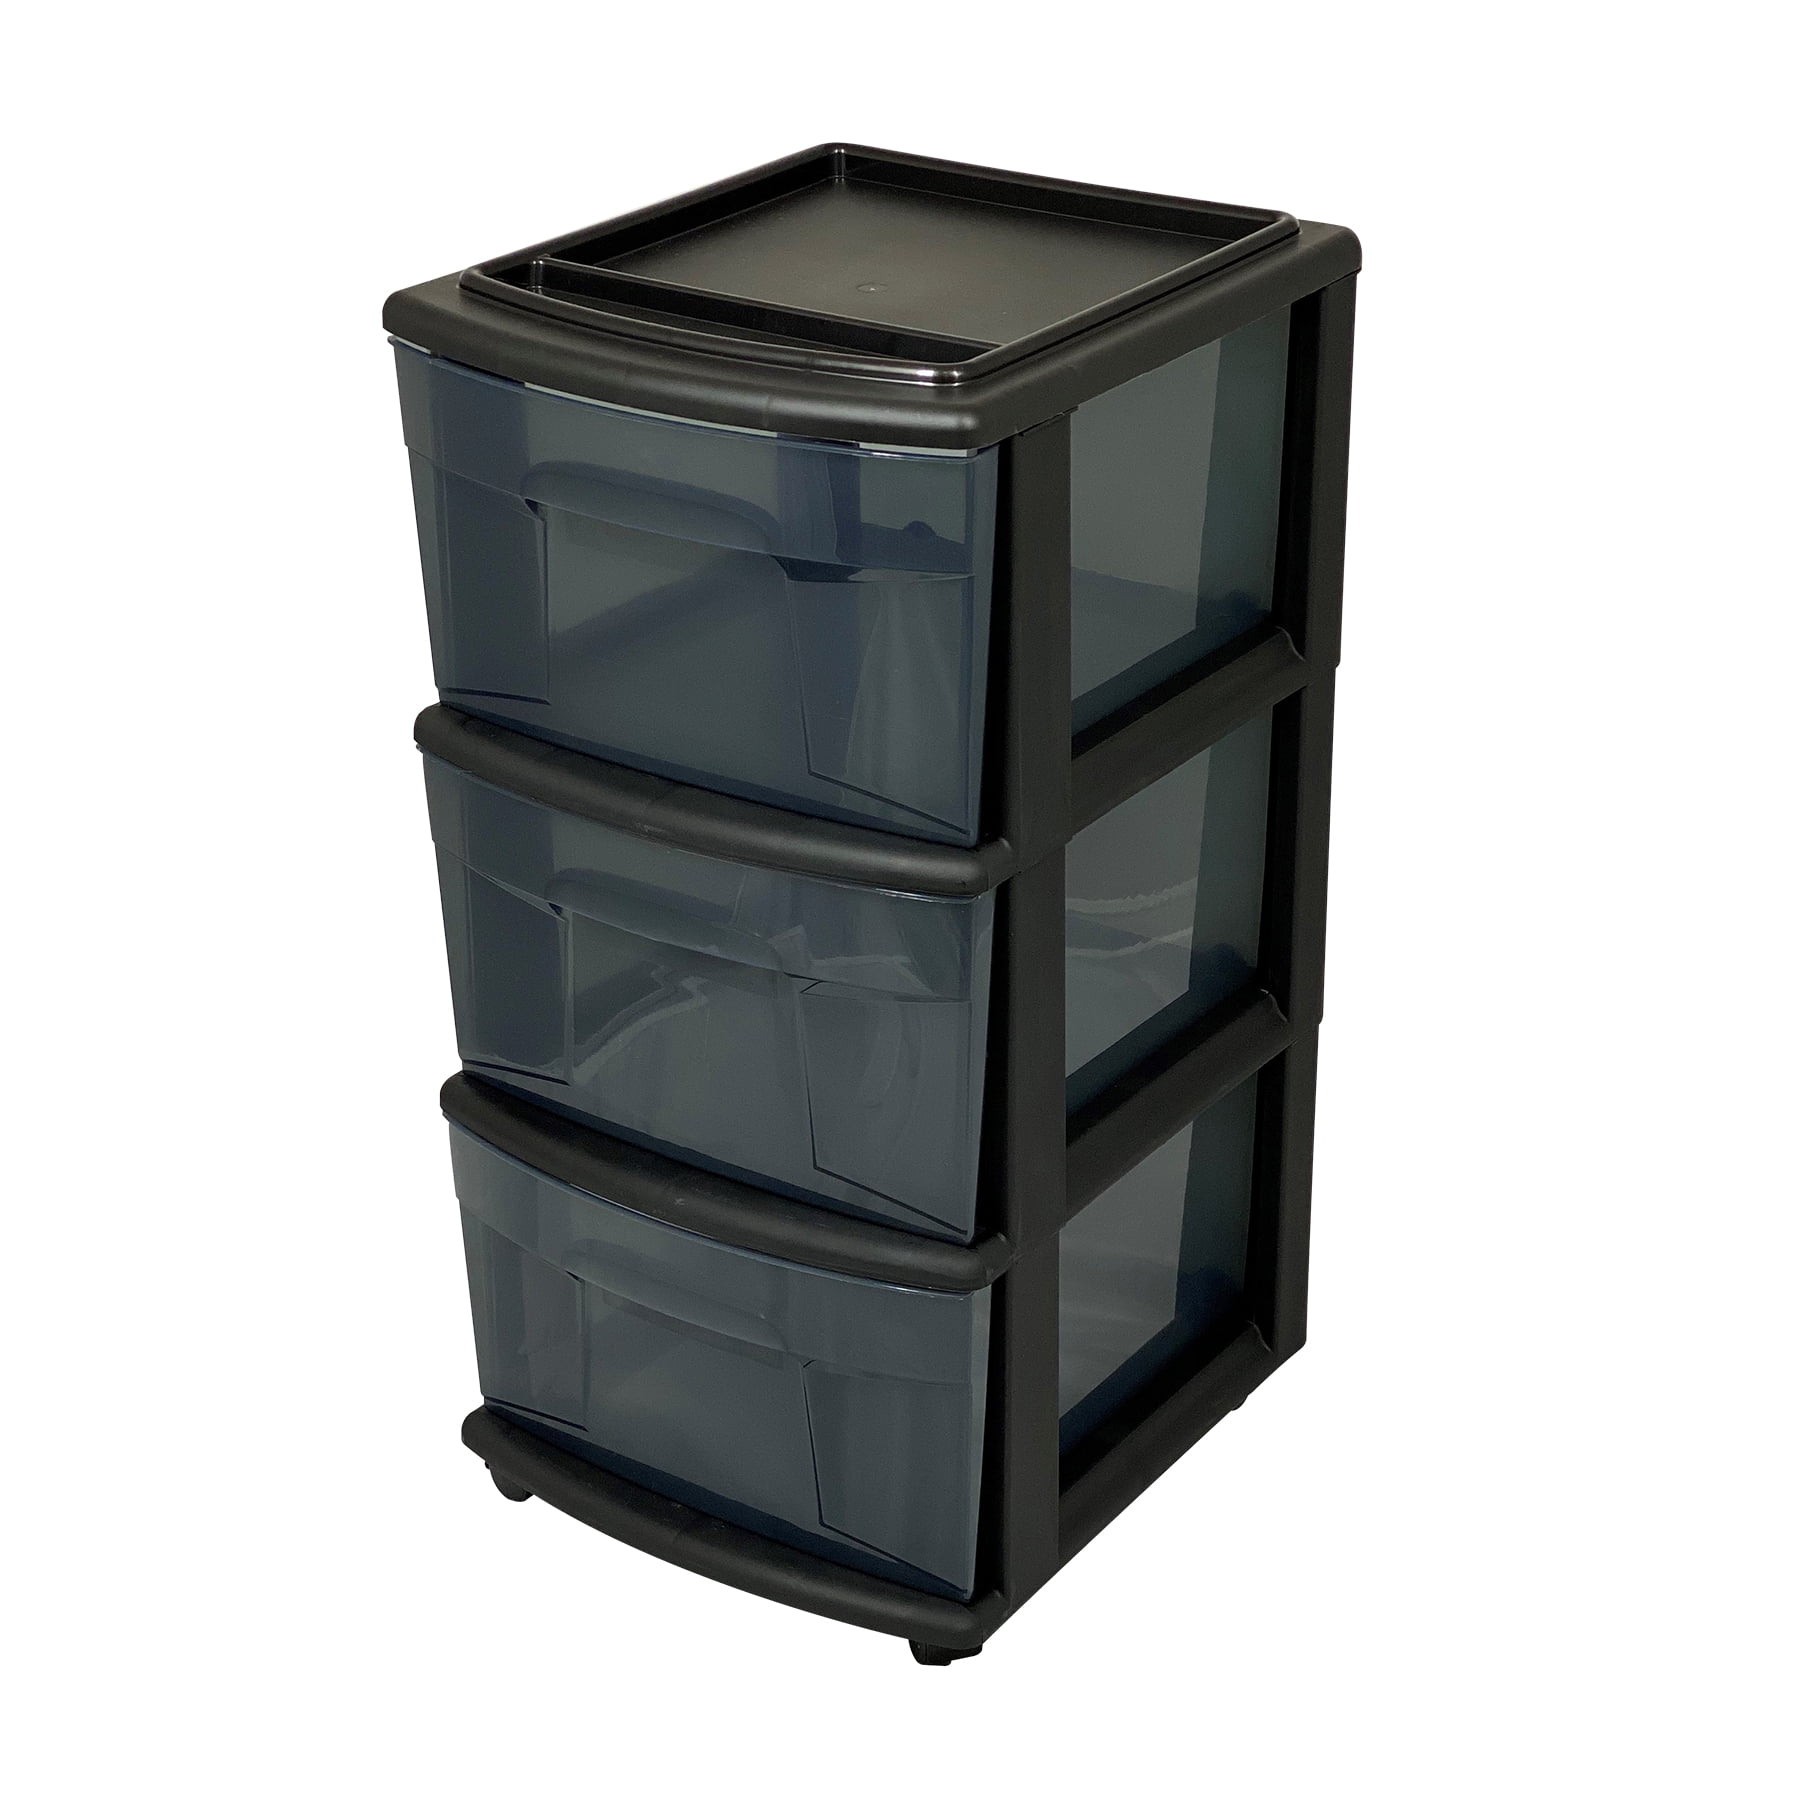 Homz 25 Inch Solid Plastic 3 Drawer Wheeled Home Storage Organizer Cart 3 Pack 